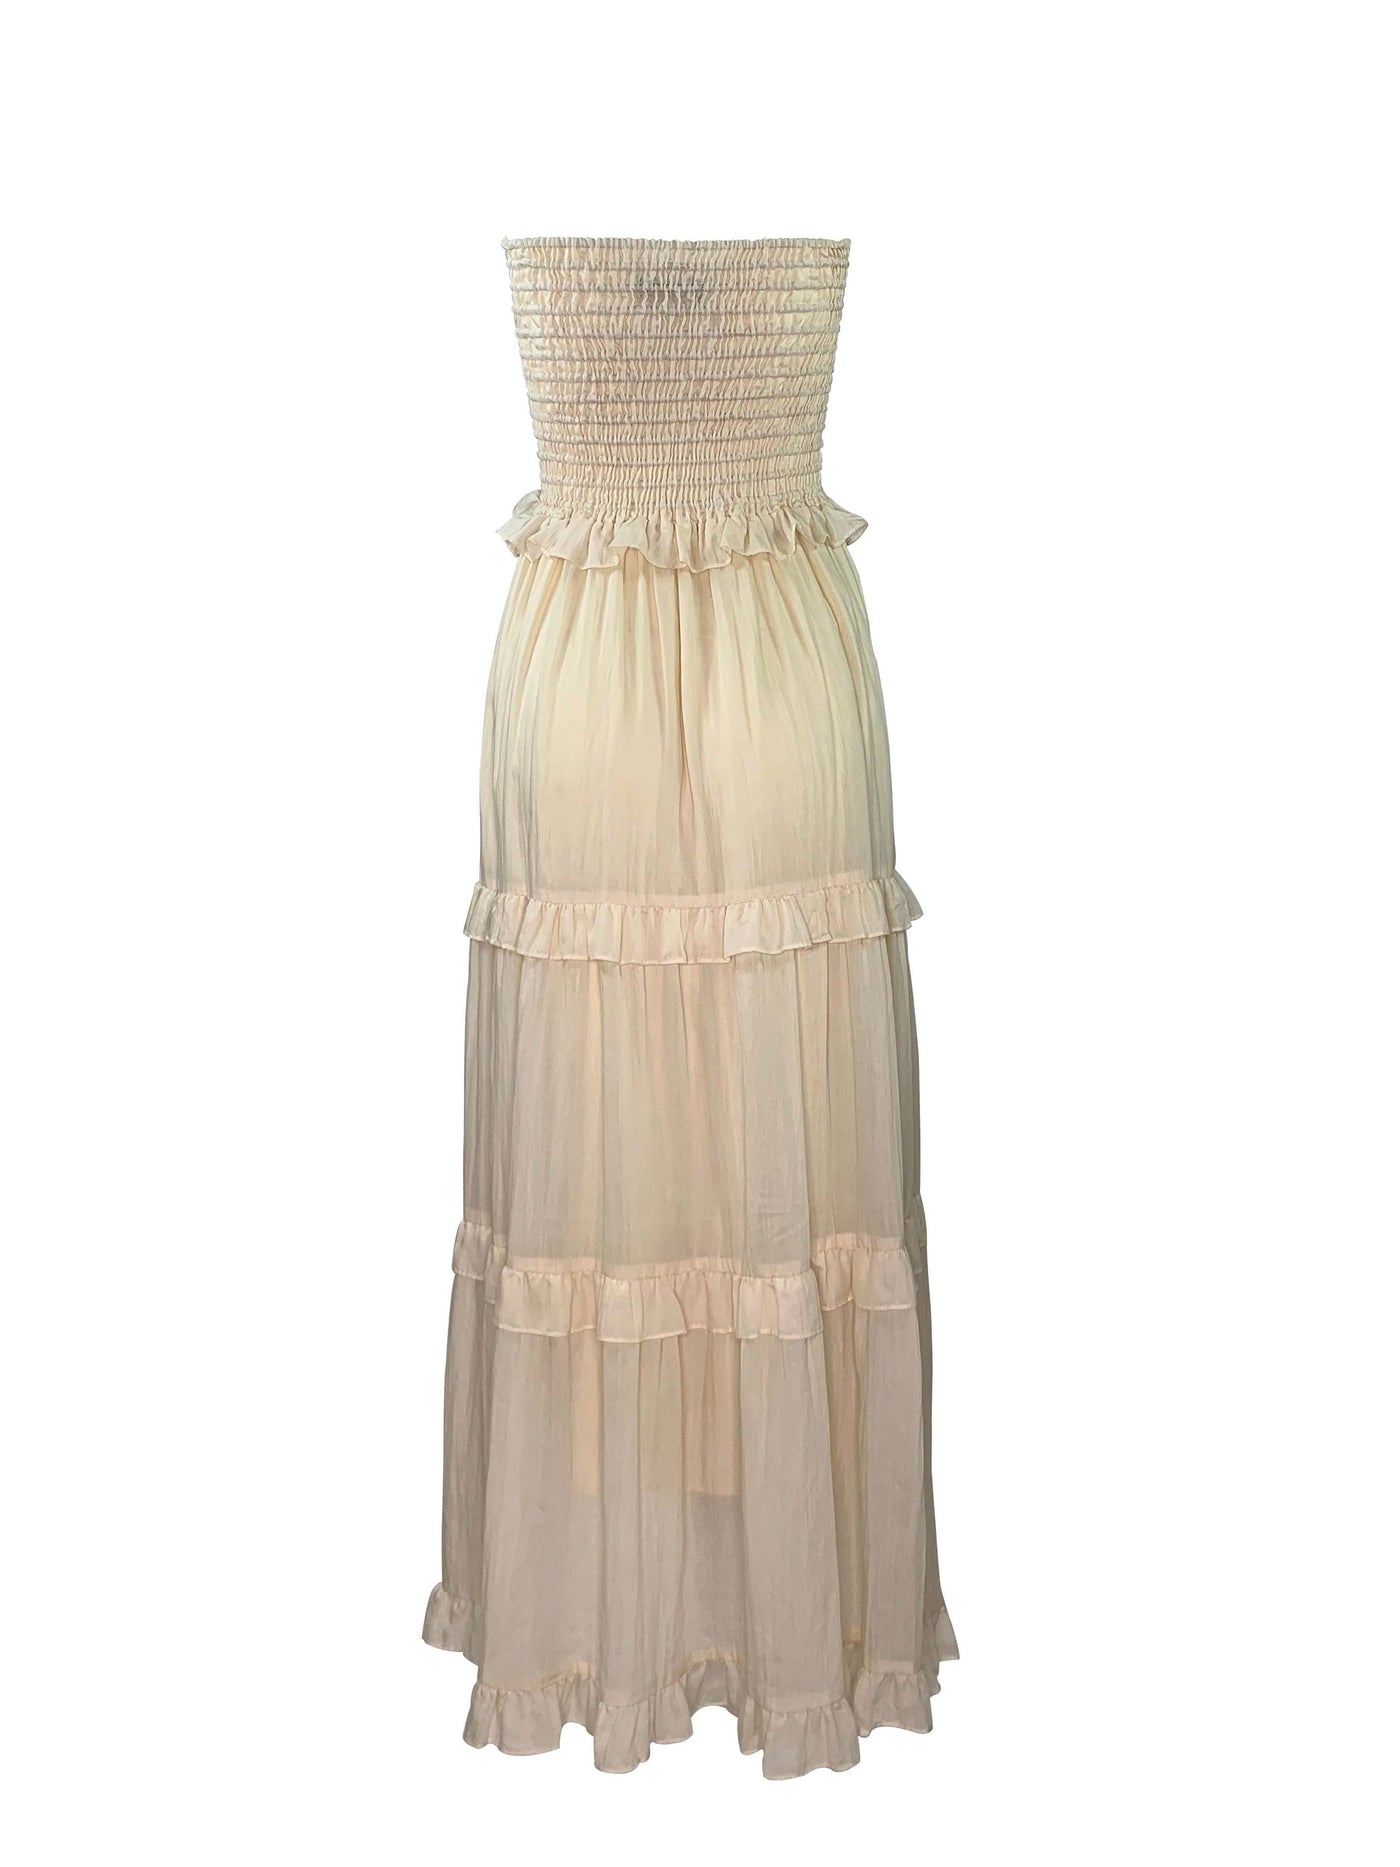 The Meadow 2-in 1 Strapless Dress & Maxi Skirt by KonaCoco